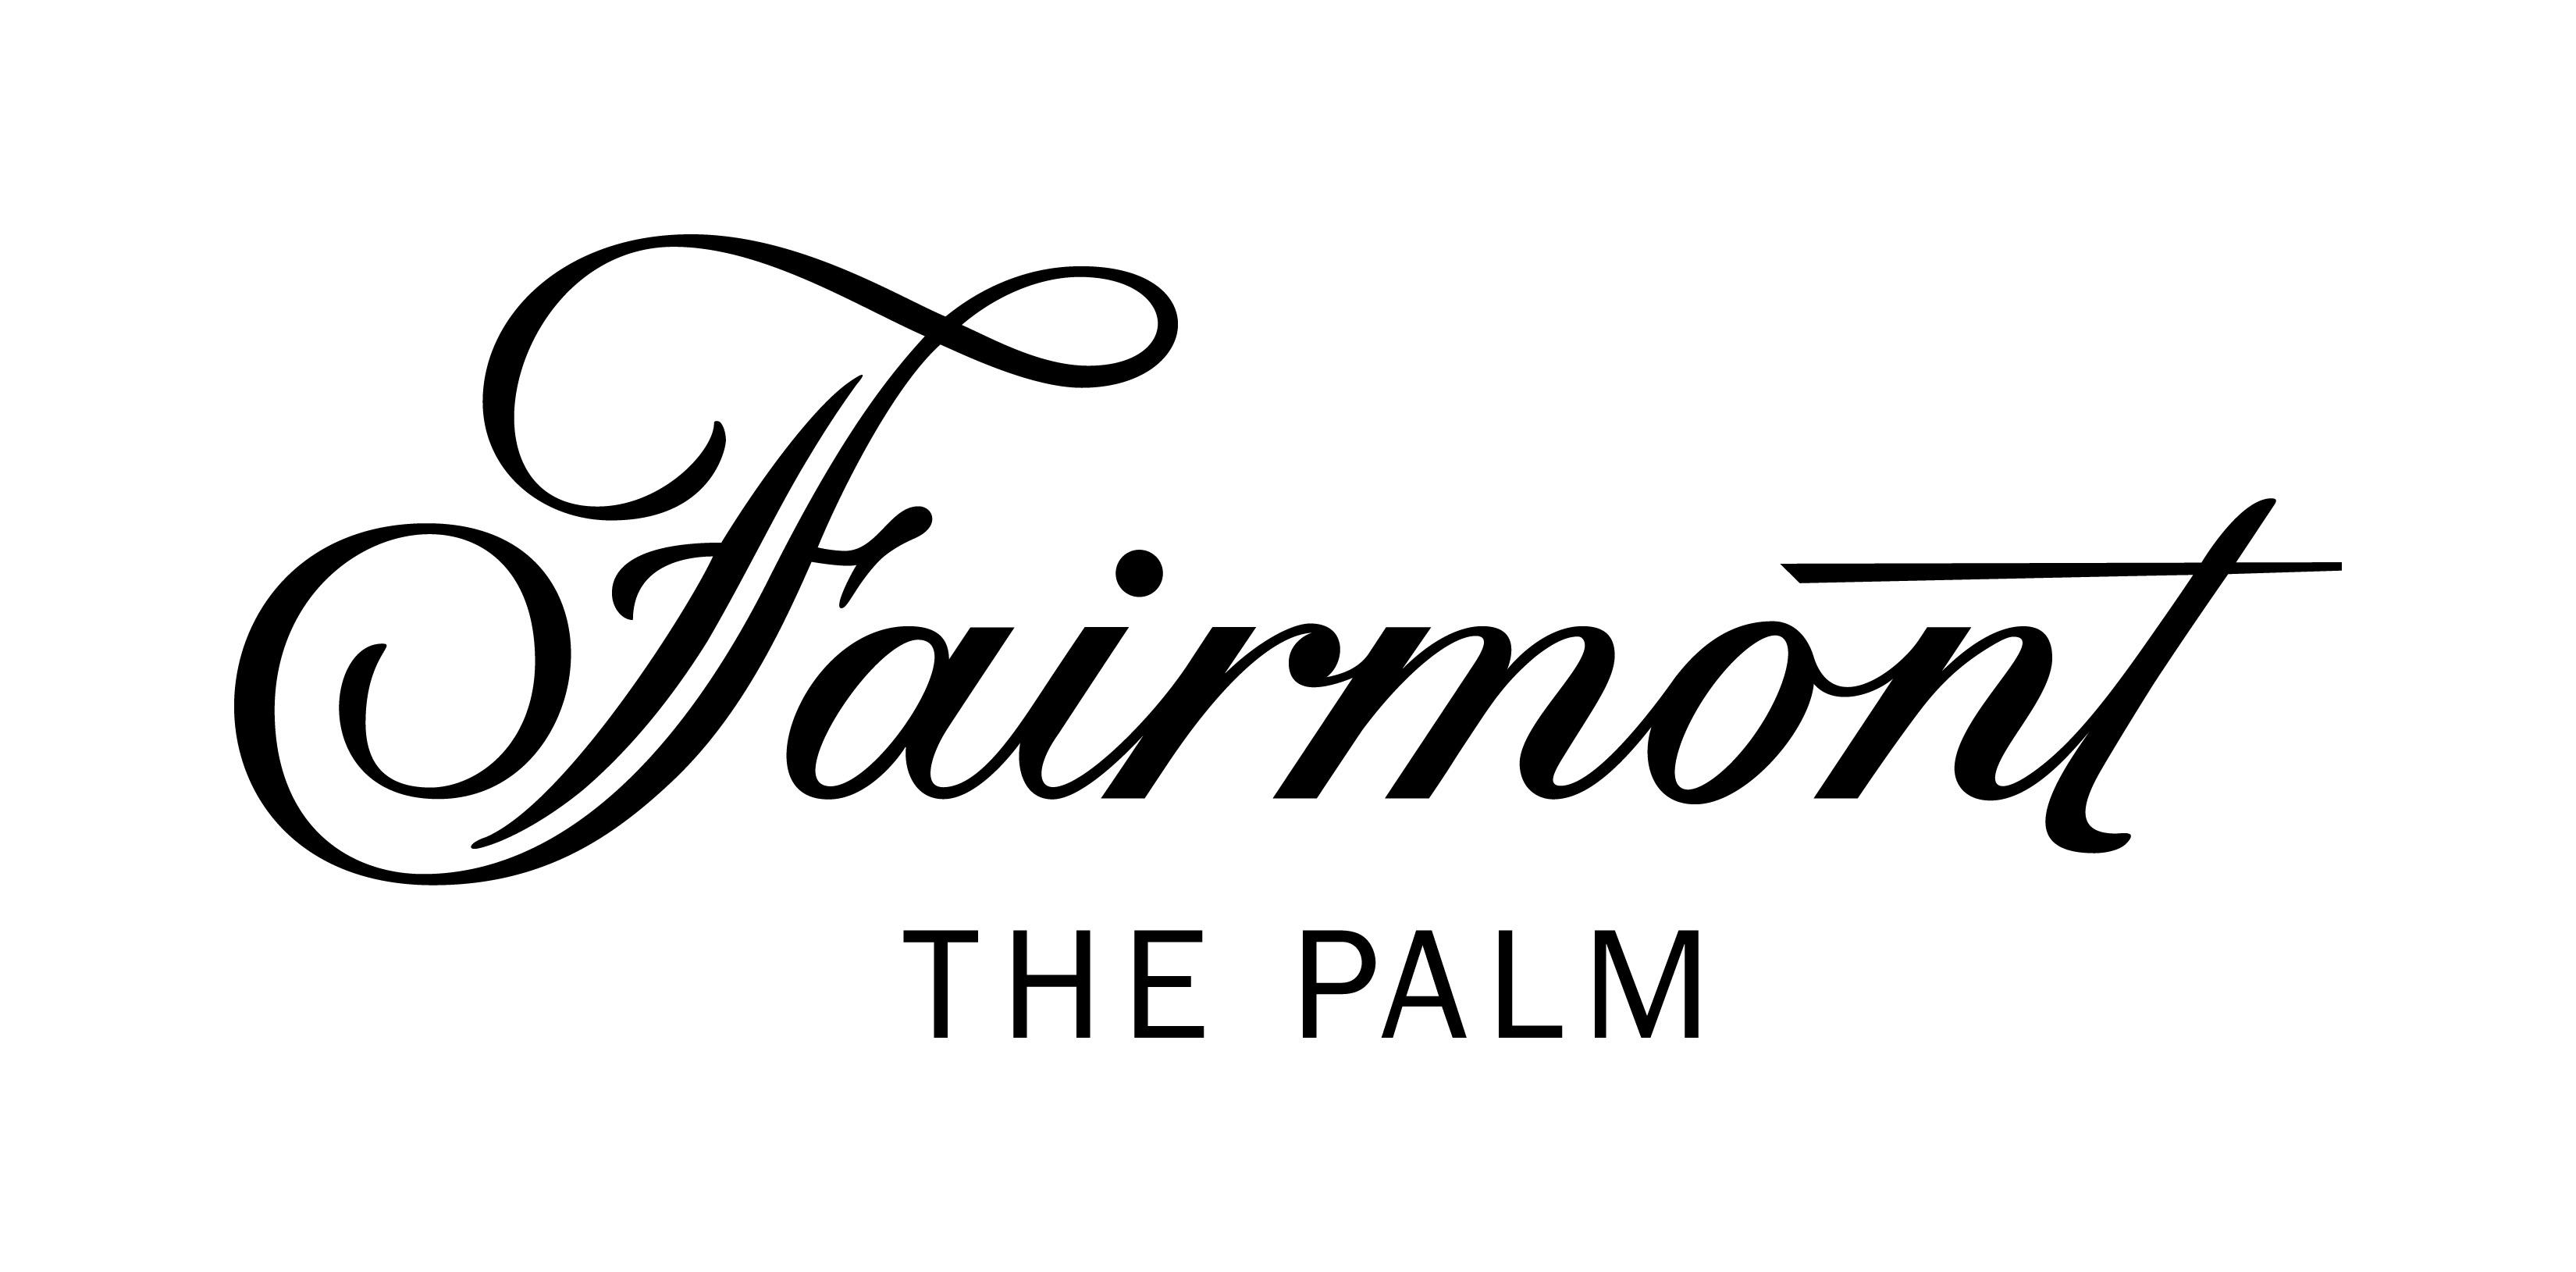 Fairmont Palm Logo - Fairmont The Palm logo in black 2015 - Inside The Closet